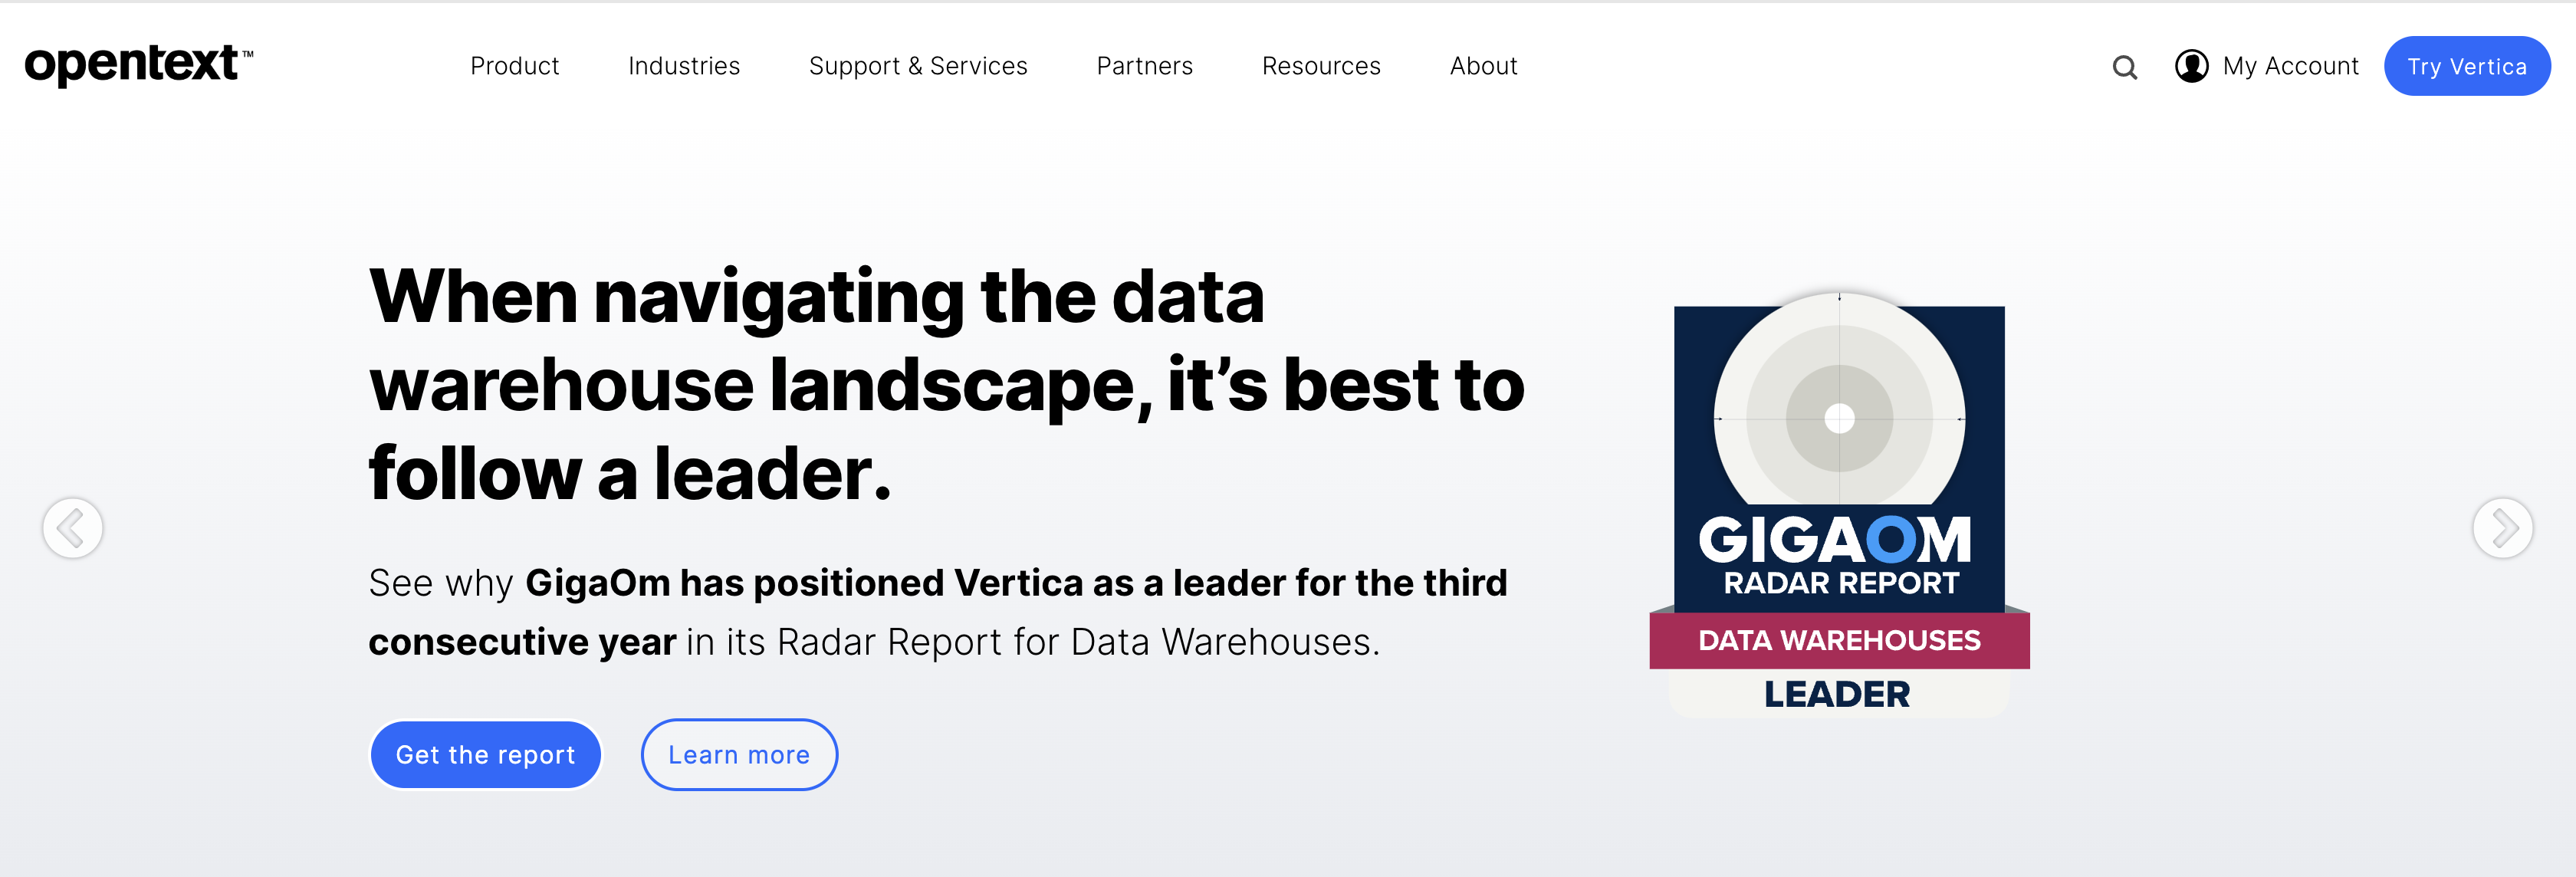 Vertica - Data Warehouse